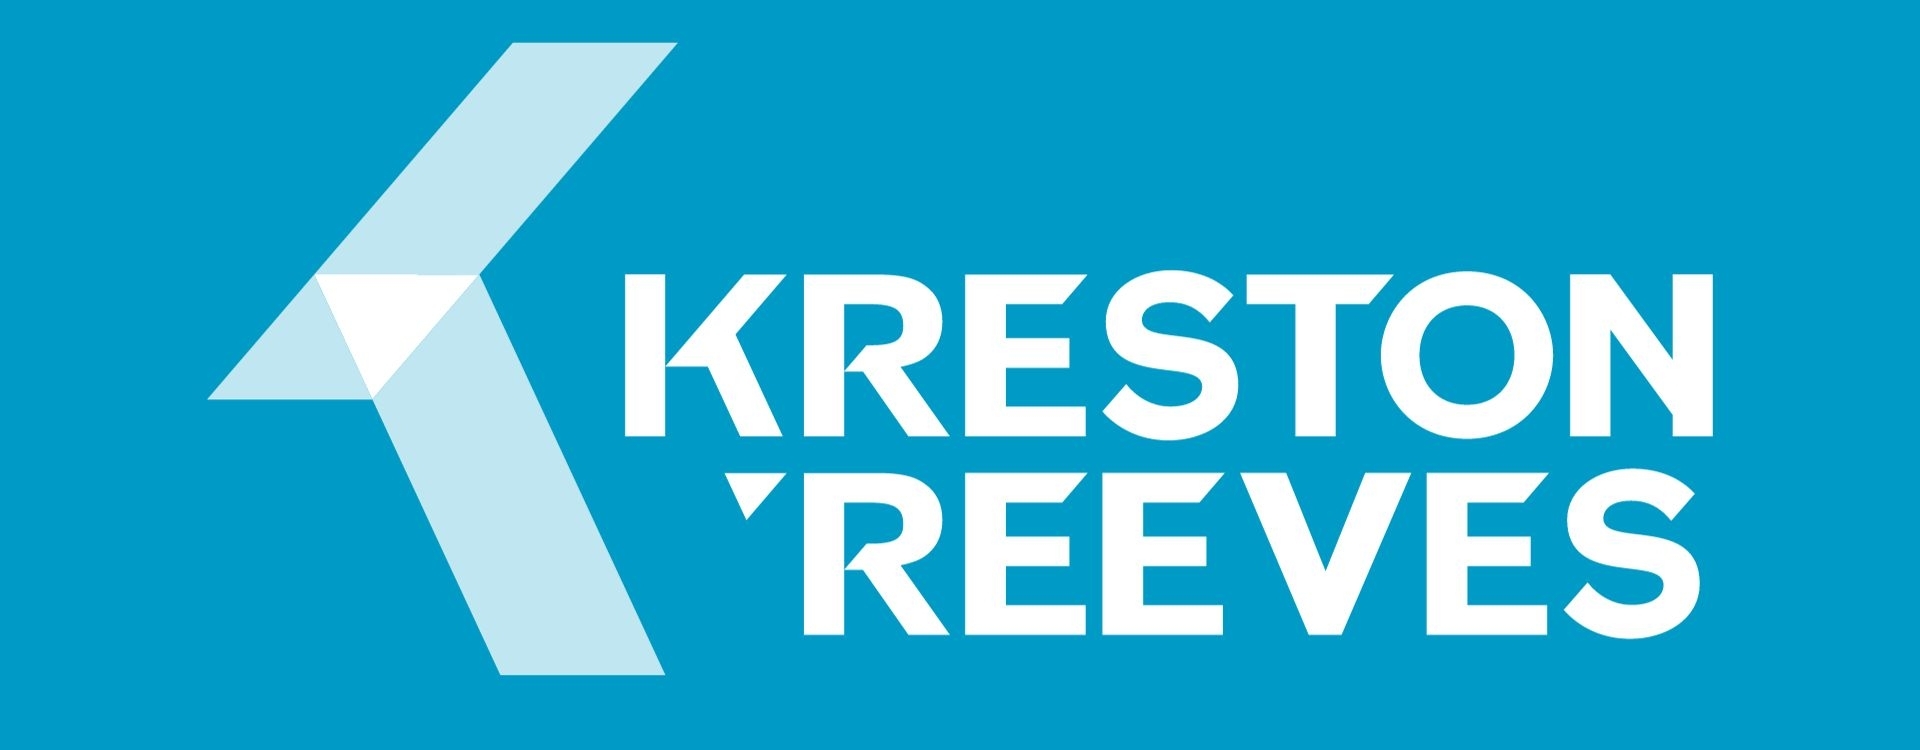 Kreston Reeves raise £3,000 after completing Three Peaks Challenge